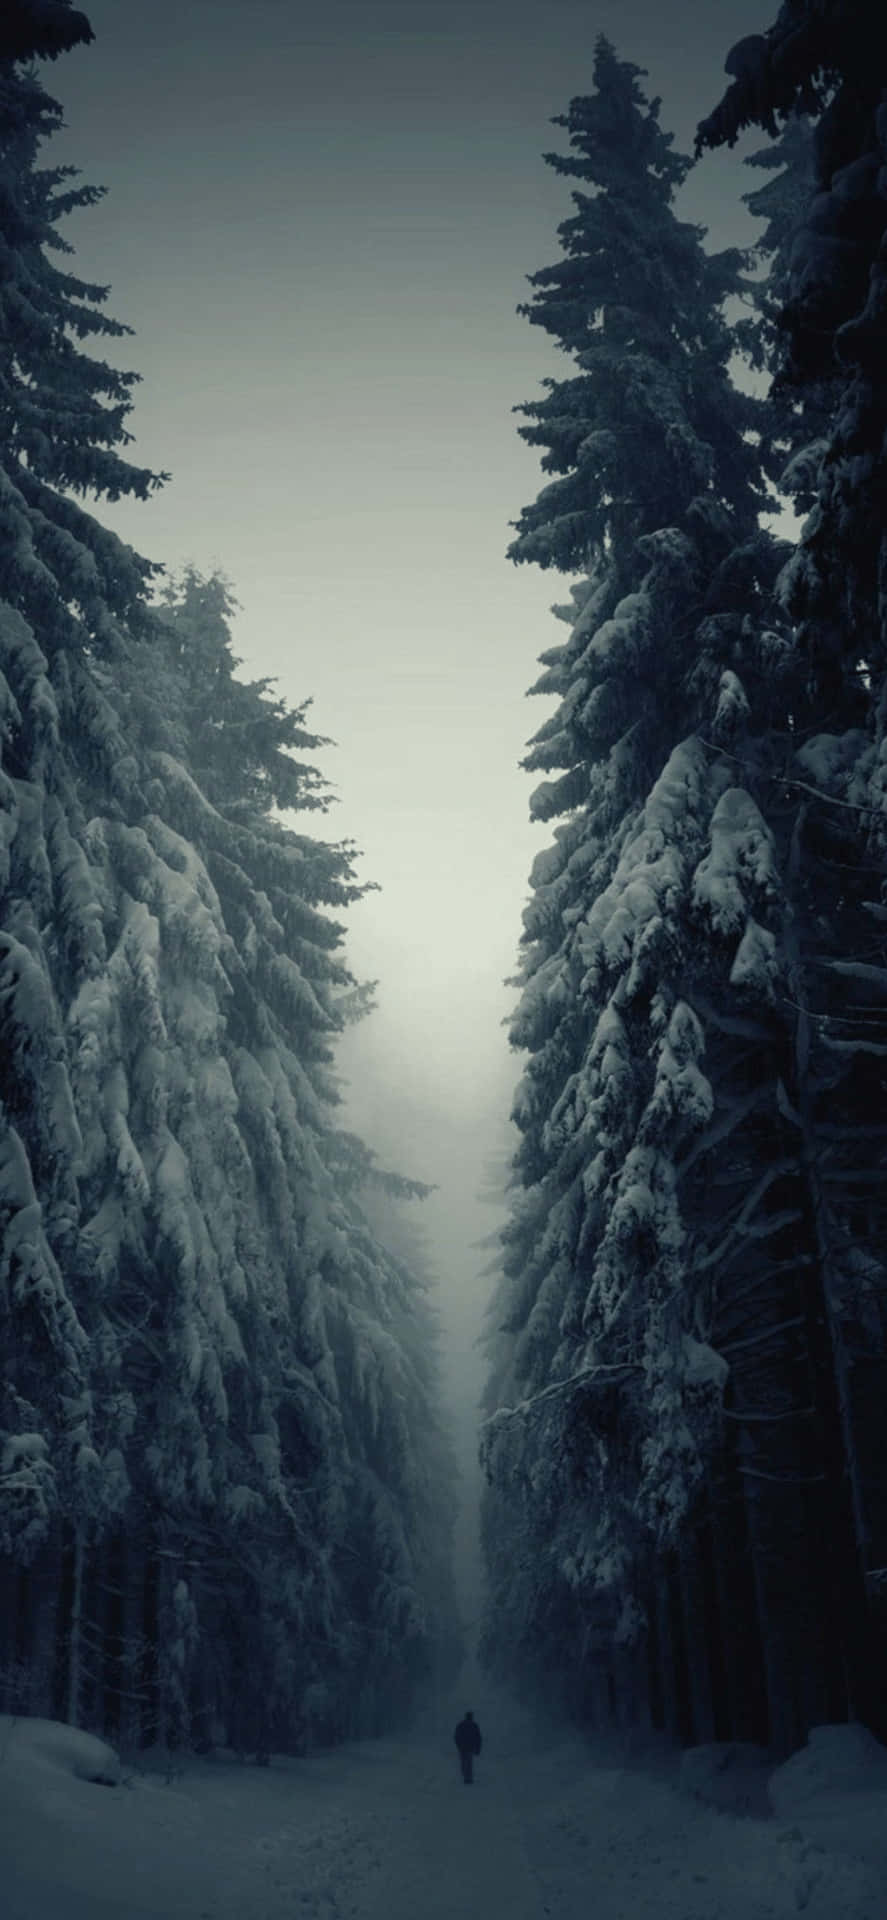 Gloomy Pine Trees iPhone XS Max Winter Background